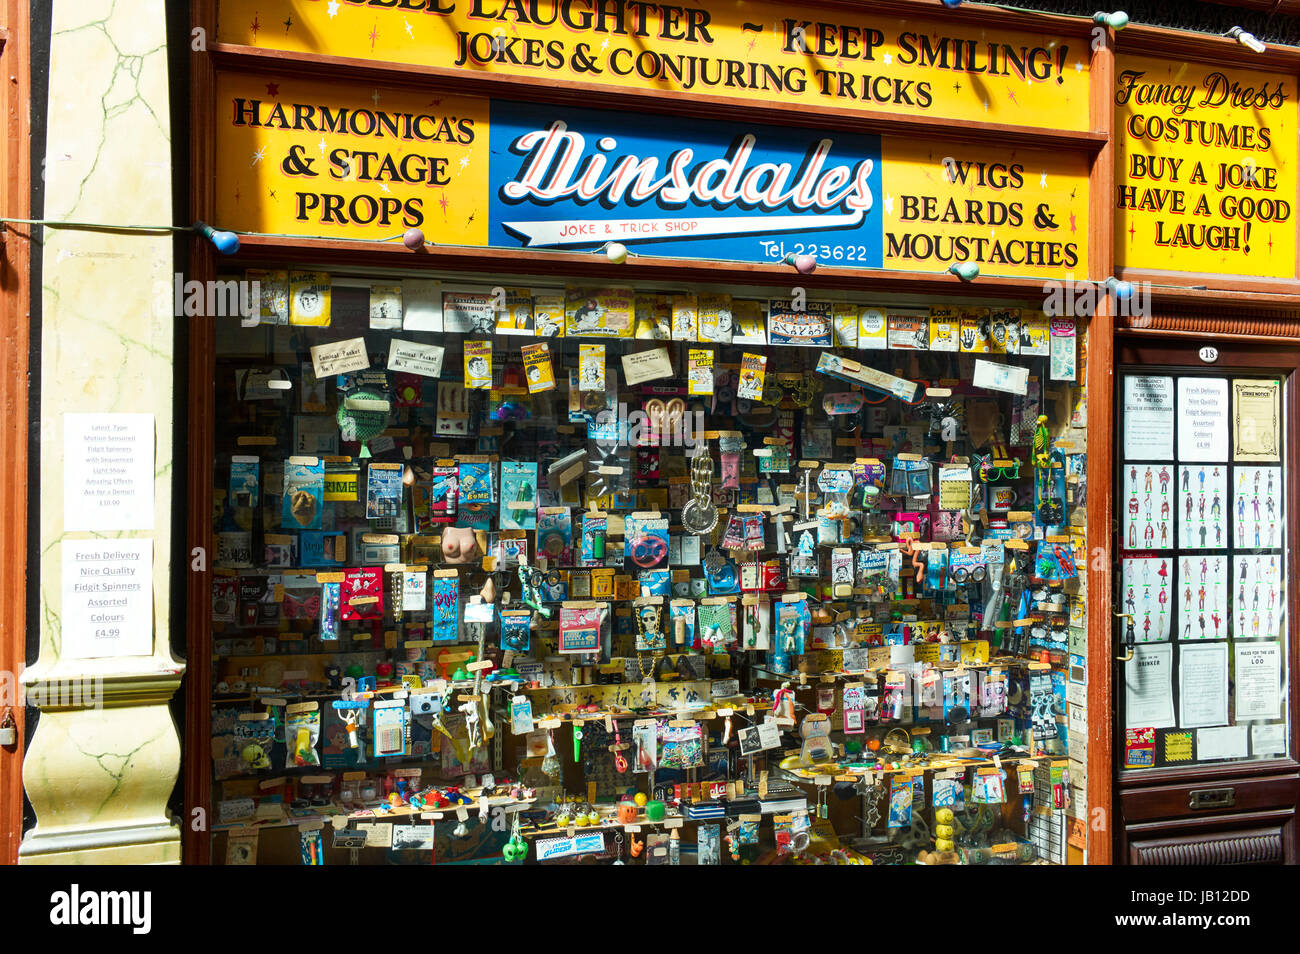 Dinsdales costume e scherzo shop in Hepworth Arcade, Hull Foto Stock